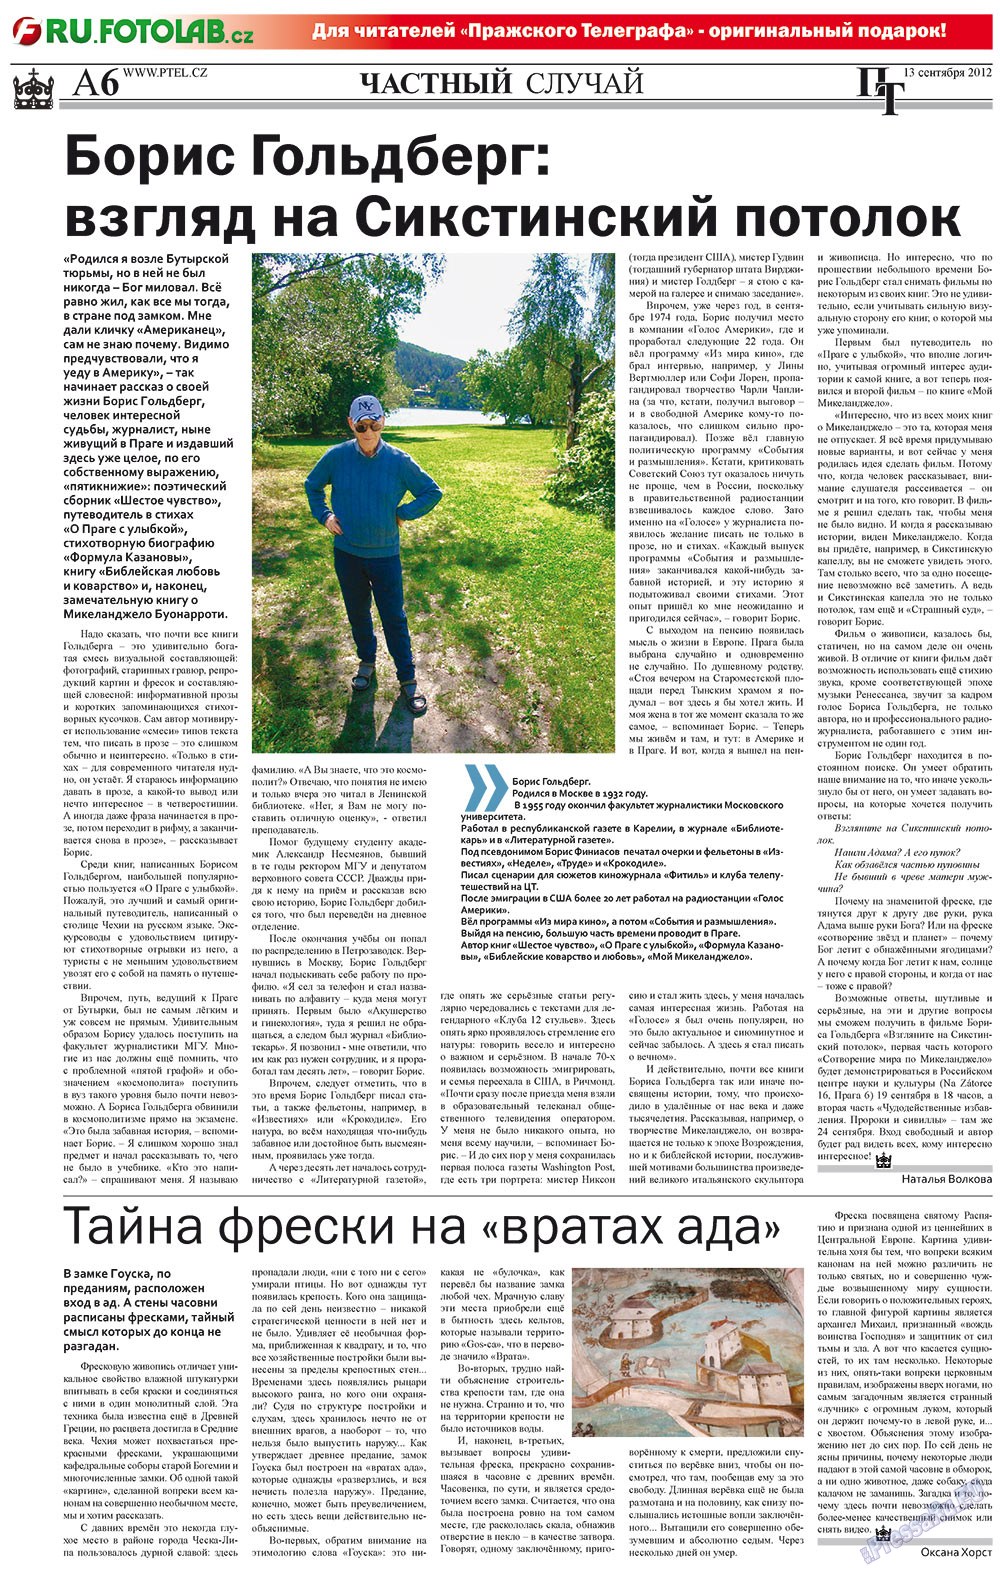 Пражский телеграф, газета. 2012 №36 стр.6